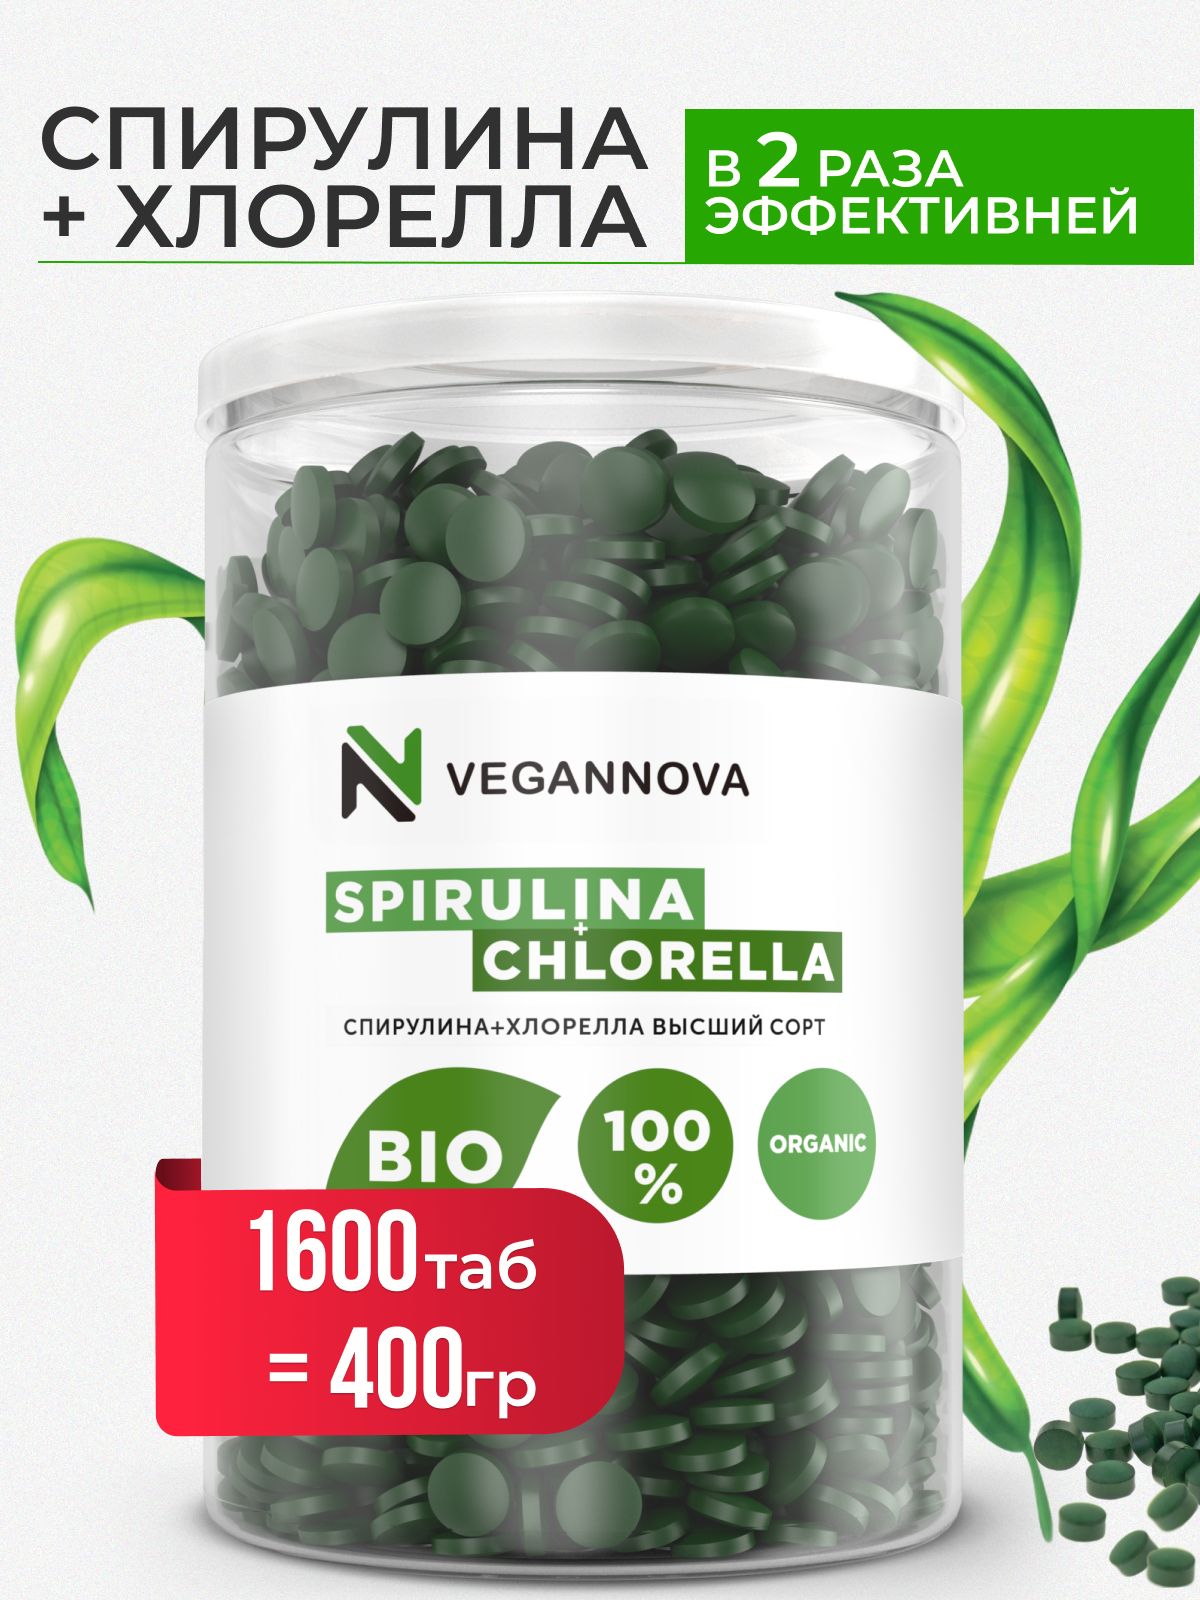 VeganNova Спирулина и хлорелла в таблетках, суперфуд, 100% натуральная, 400 г (1600 шт)